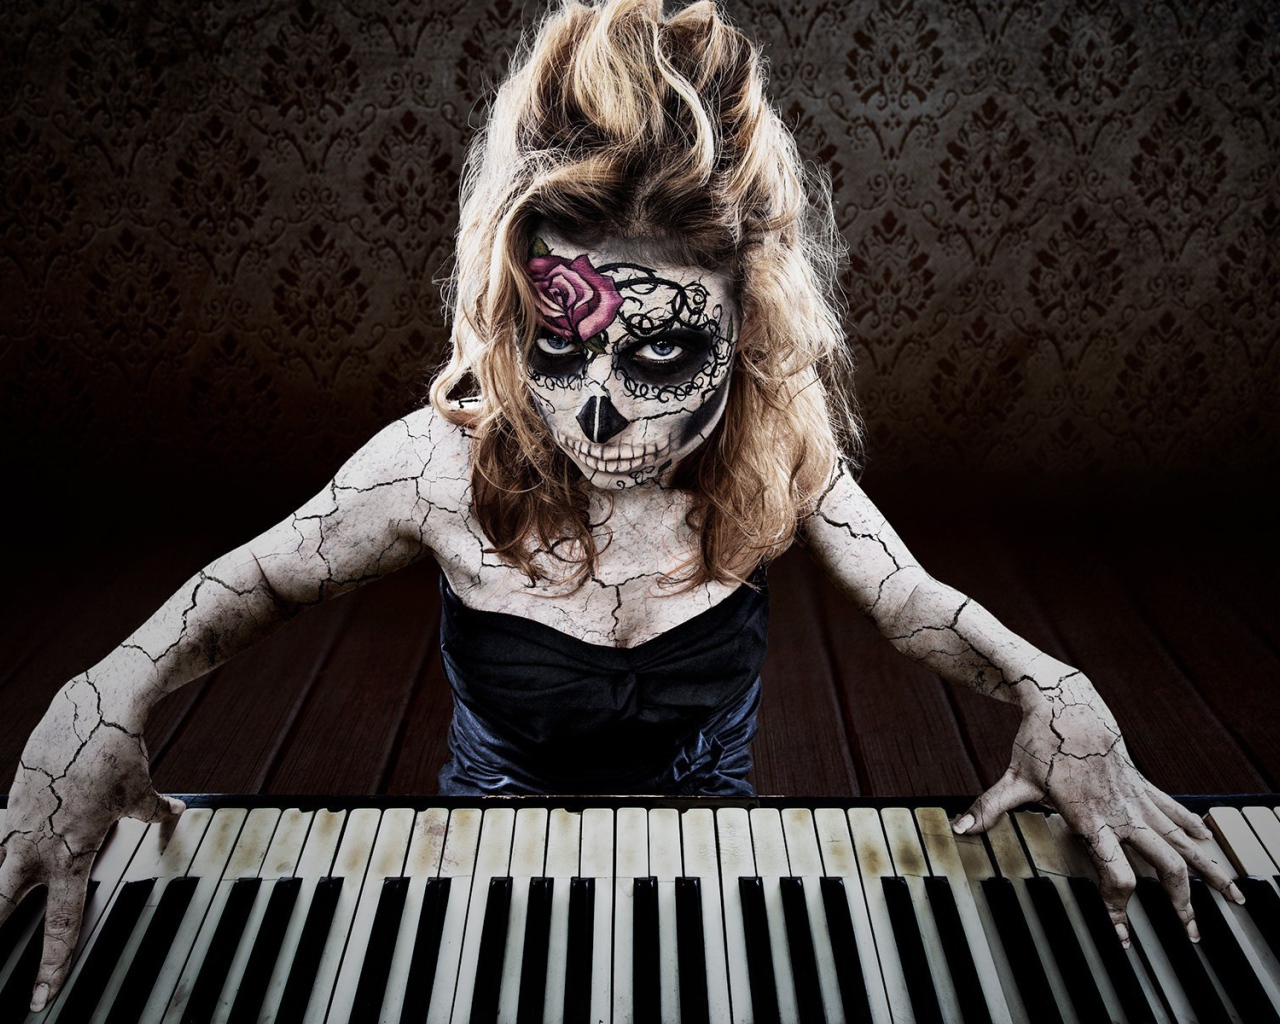 Tattooed girl playing the piano